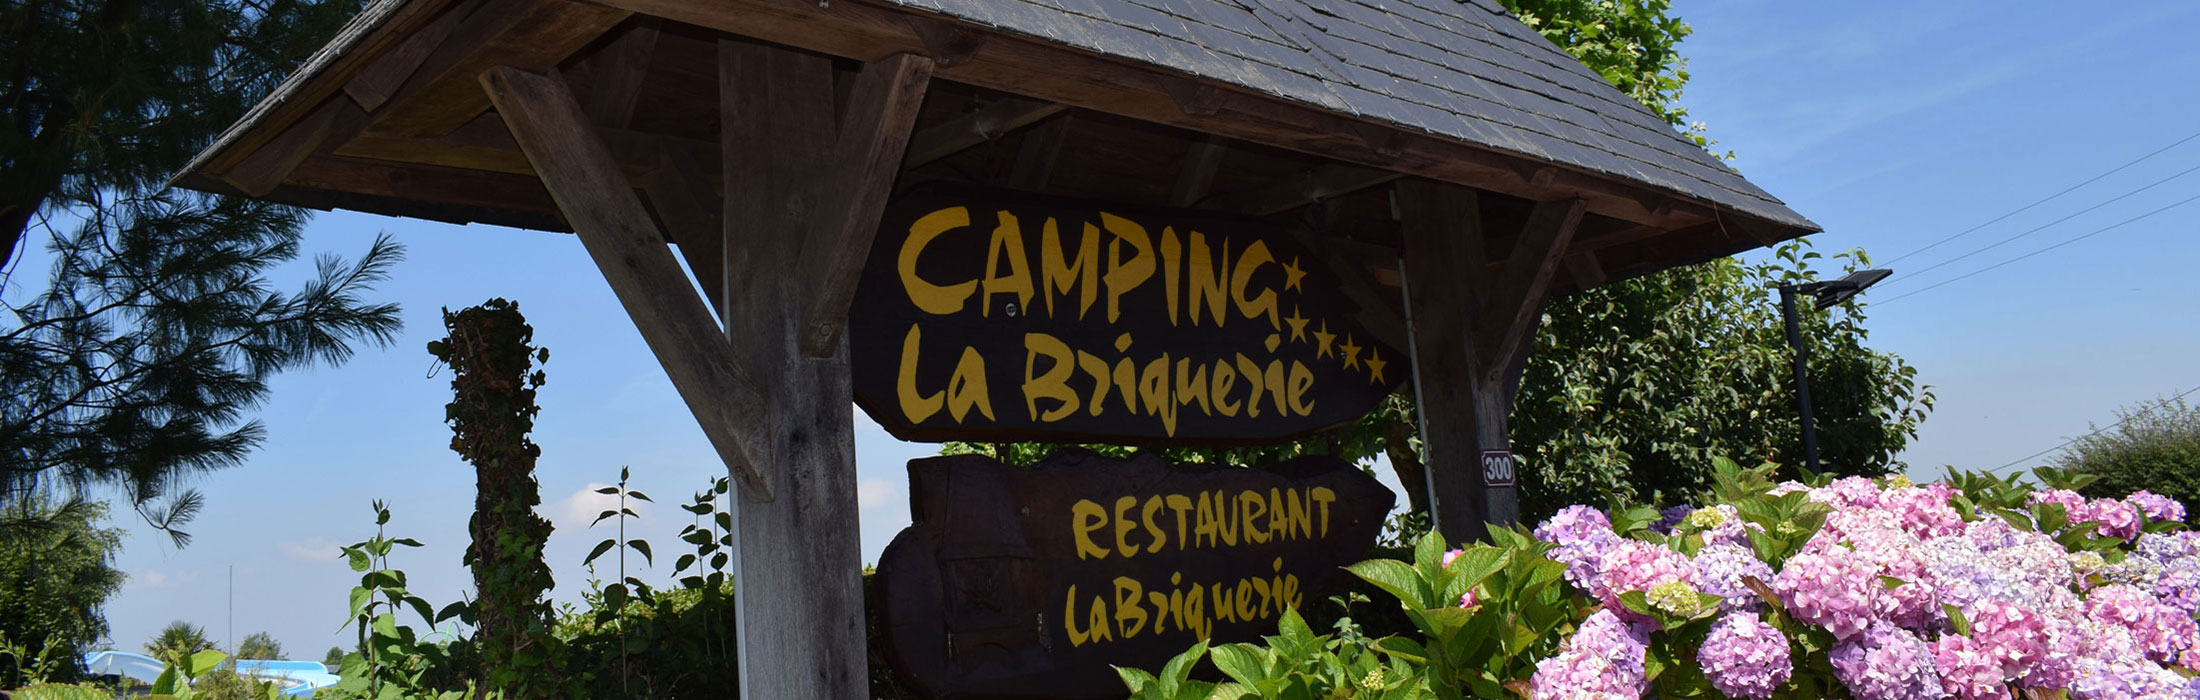 Das Camping